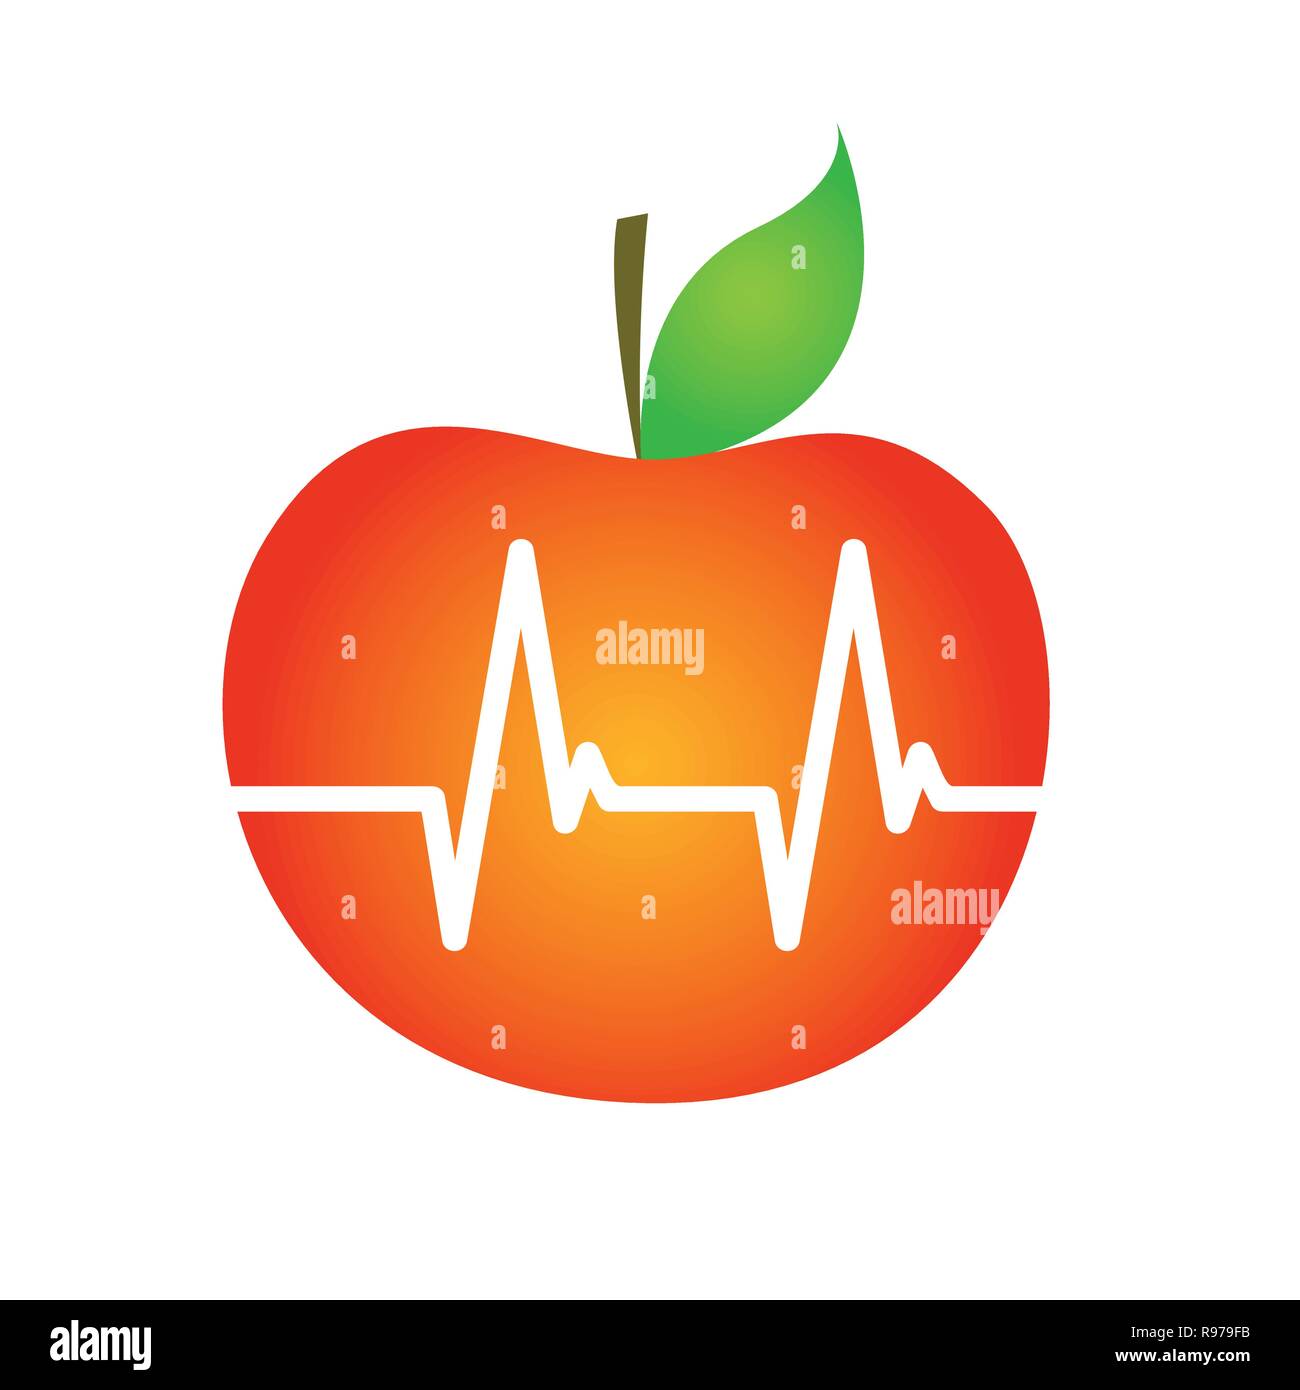 L'alimentation saine red apple concept illustration vecteur EPS10 Illustration de Vecteur